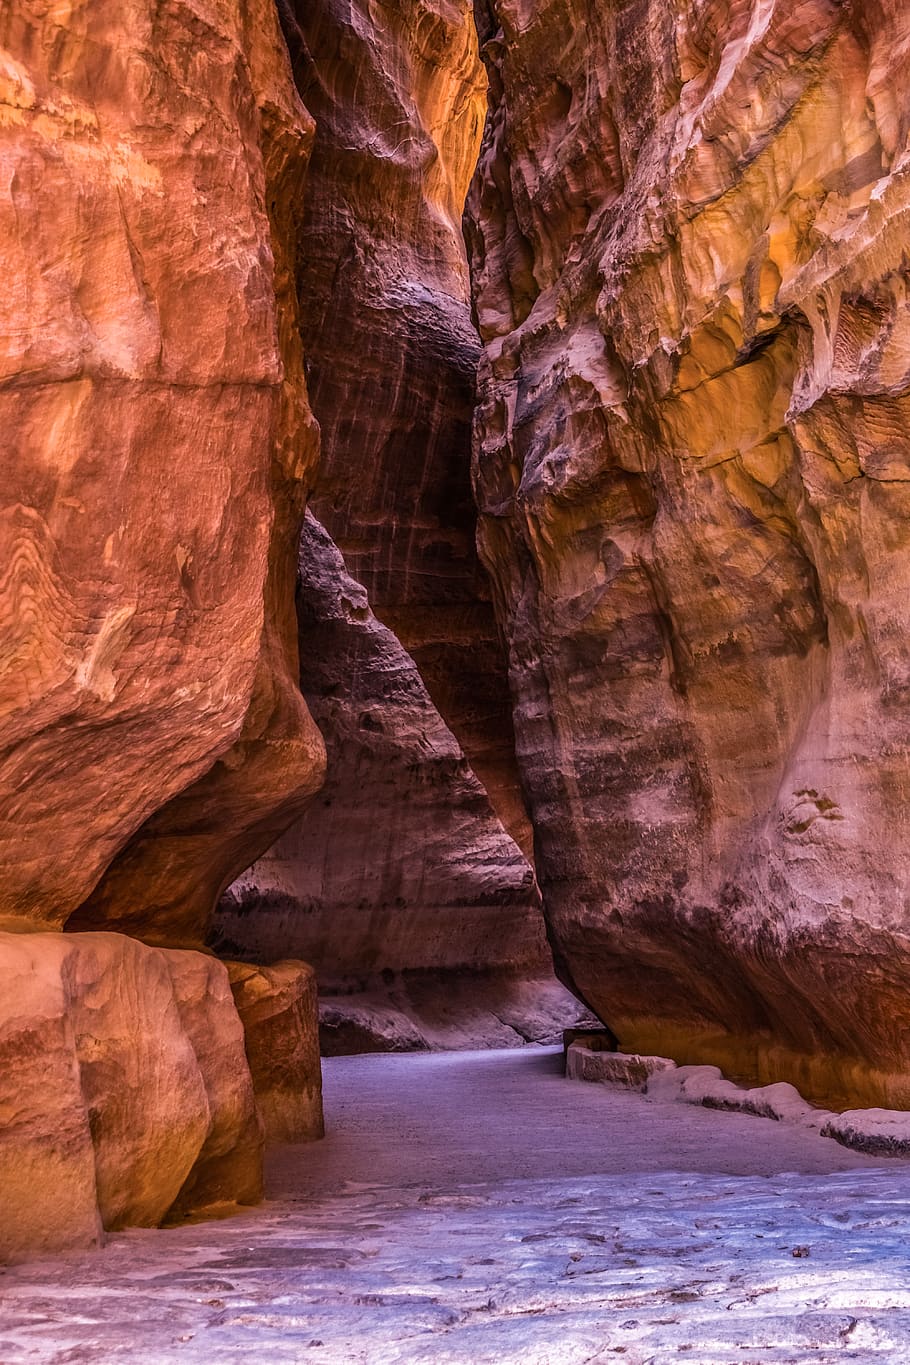 al siq canyon, canyon, gorge, travel, adventure, desert, petra, jordan, geology, stone